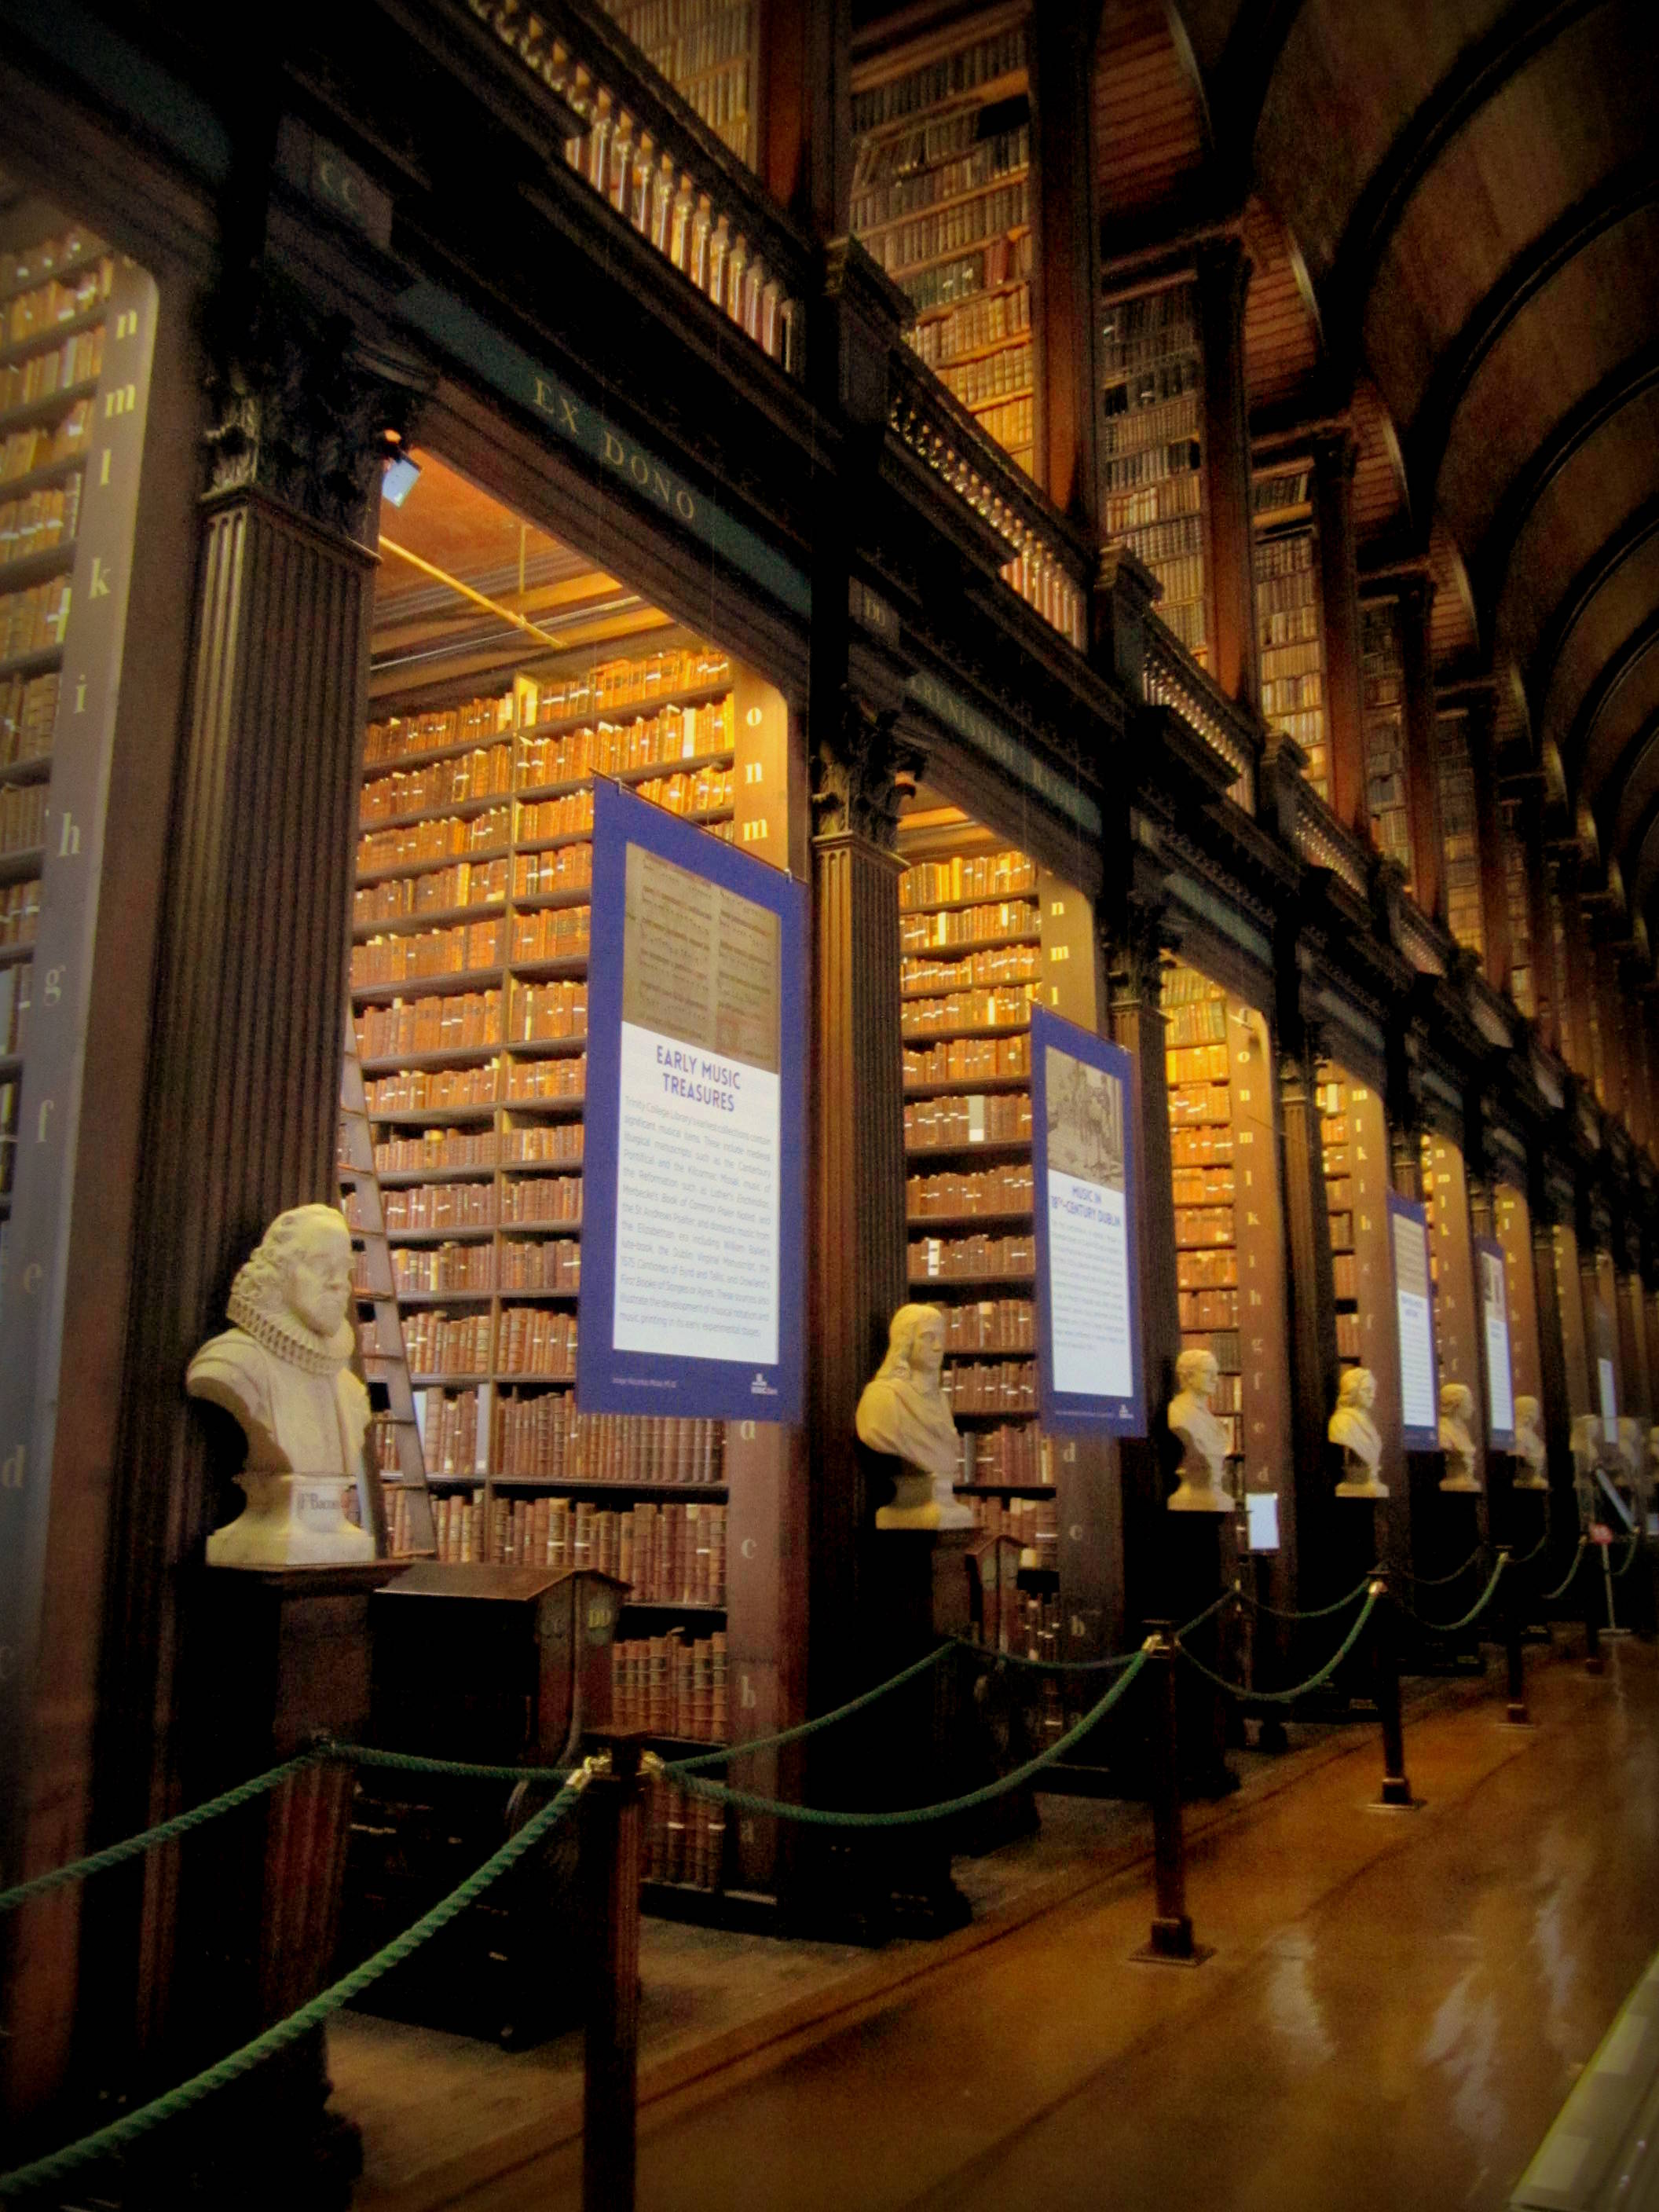 Book of Kells Library, Dublin Ireland